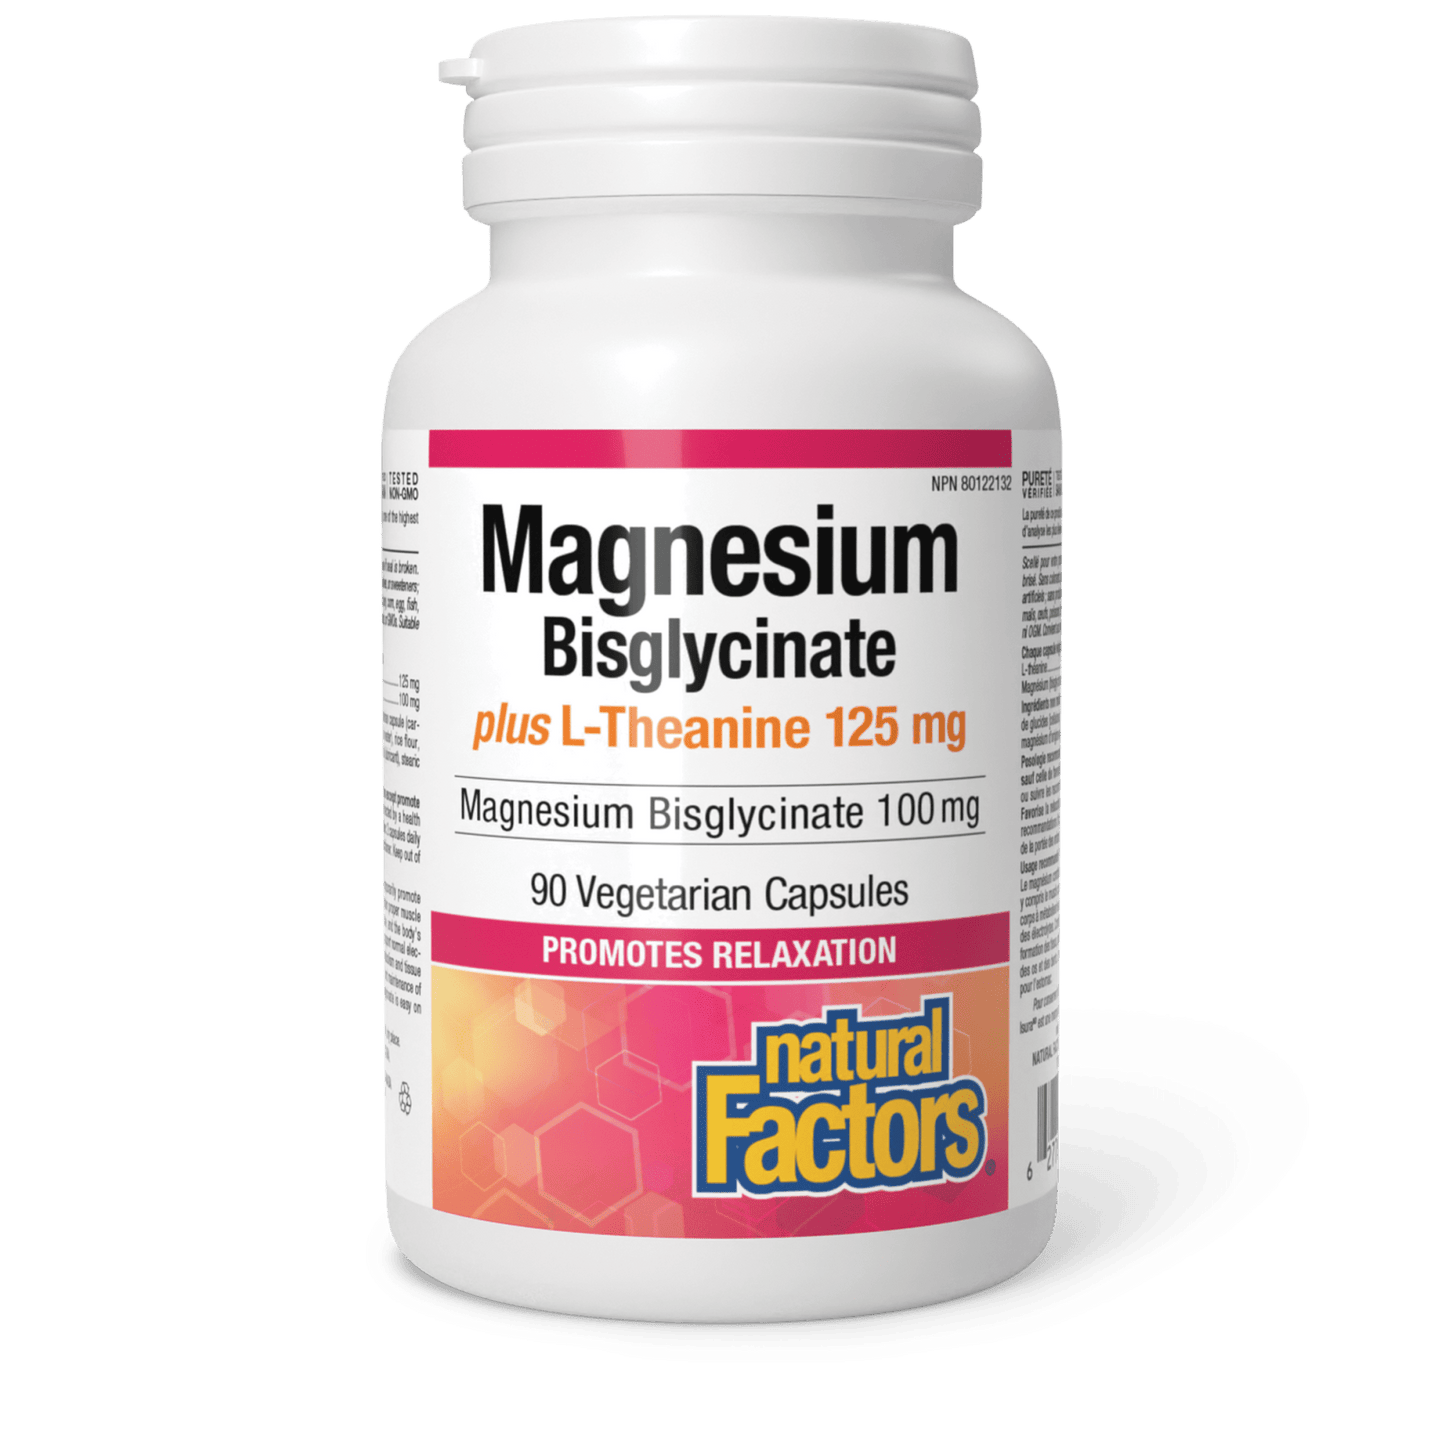 Magnesium Bisglycinate 100 mg plus L-Theanine 125 mg, Natural Factors|v|image|2867